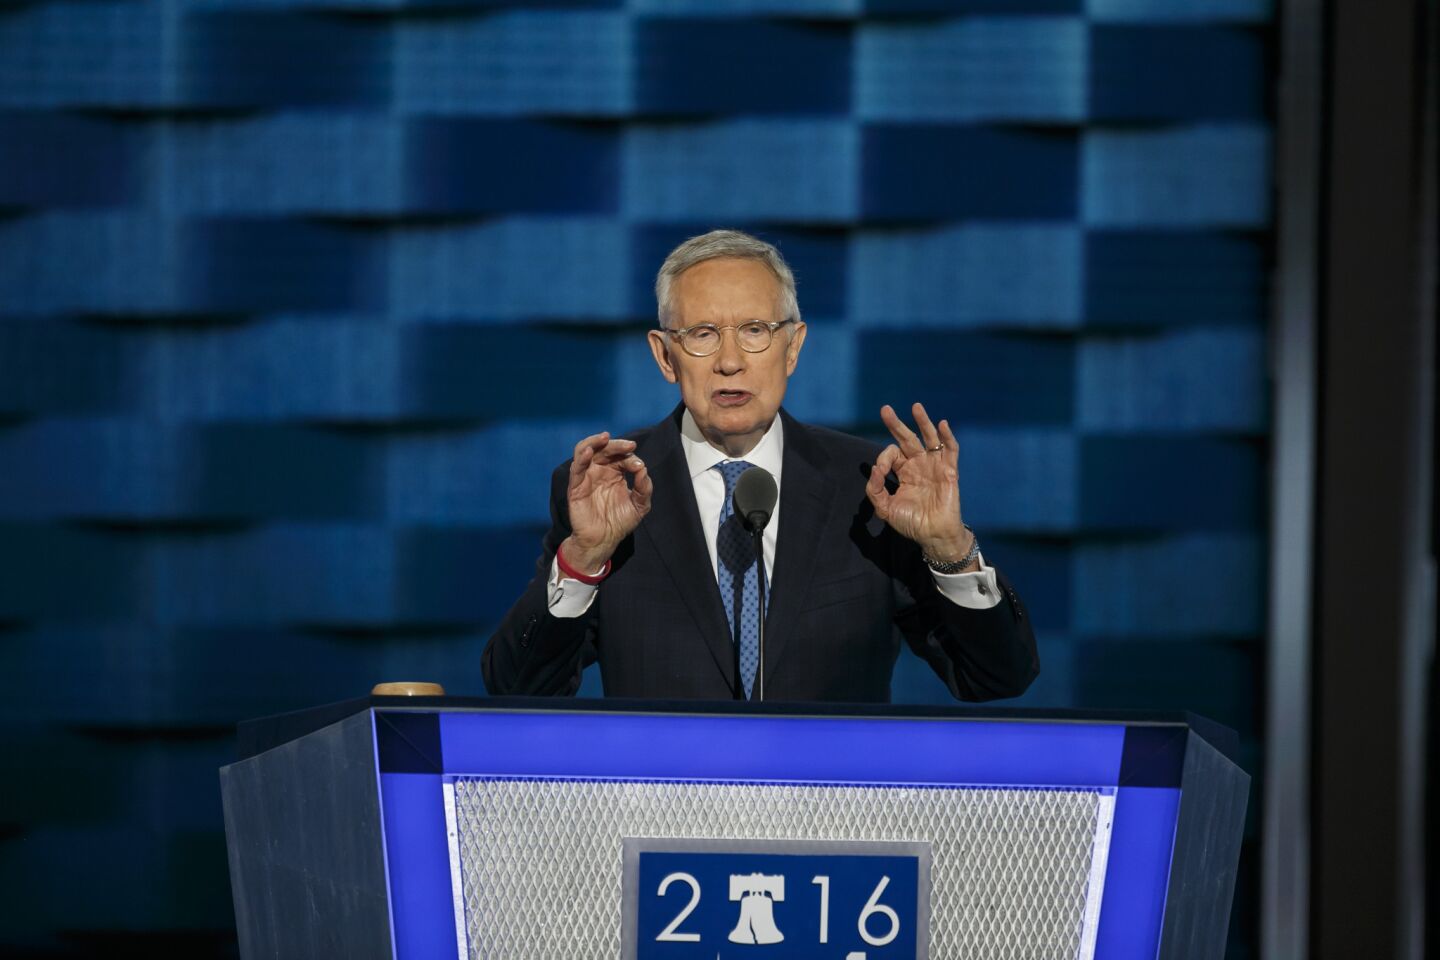 Senate Democratic Leader Harry Reid speaks at the 2016 Democratic National Convention, in Philadelphia.